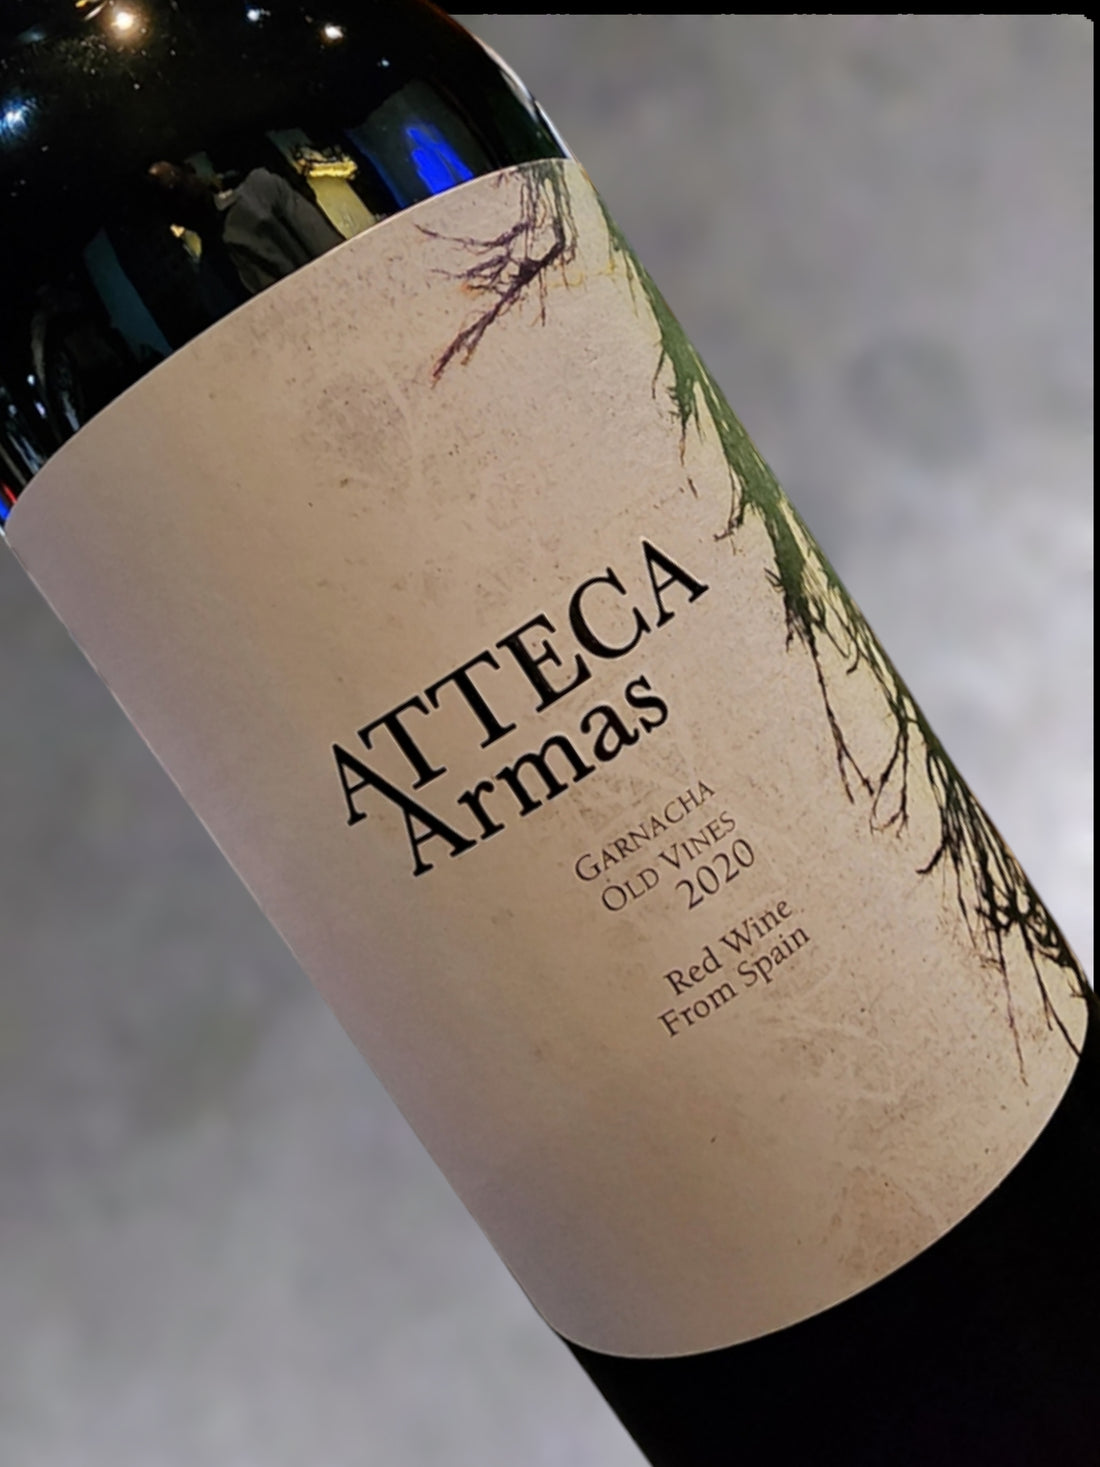 Bodegas Ateca "Atteca Armas" Garnacha Old Vines 2020